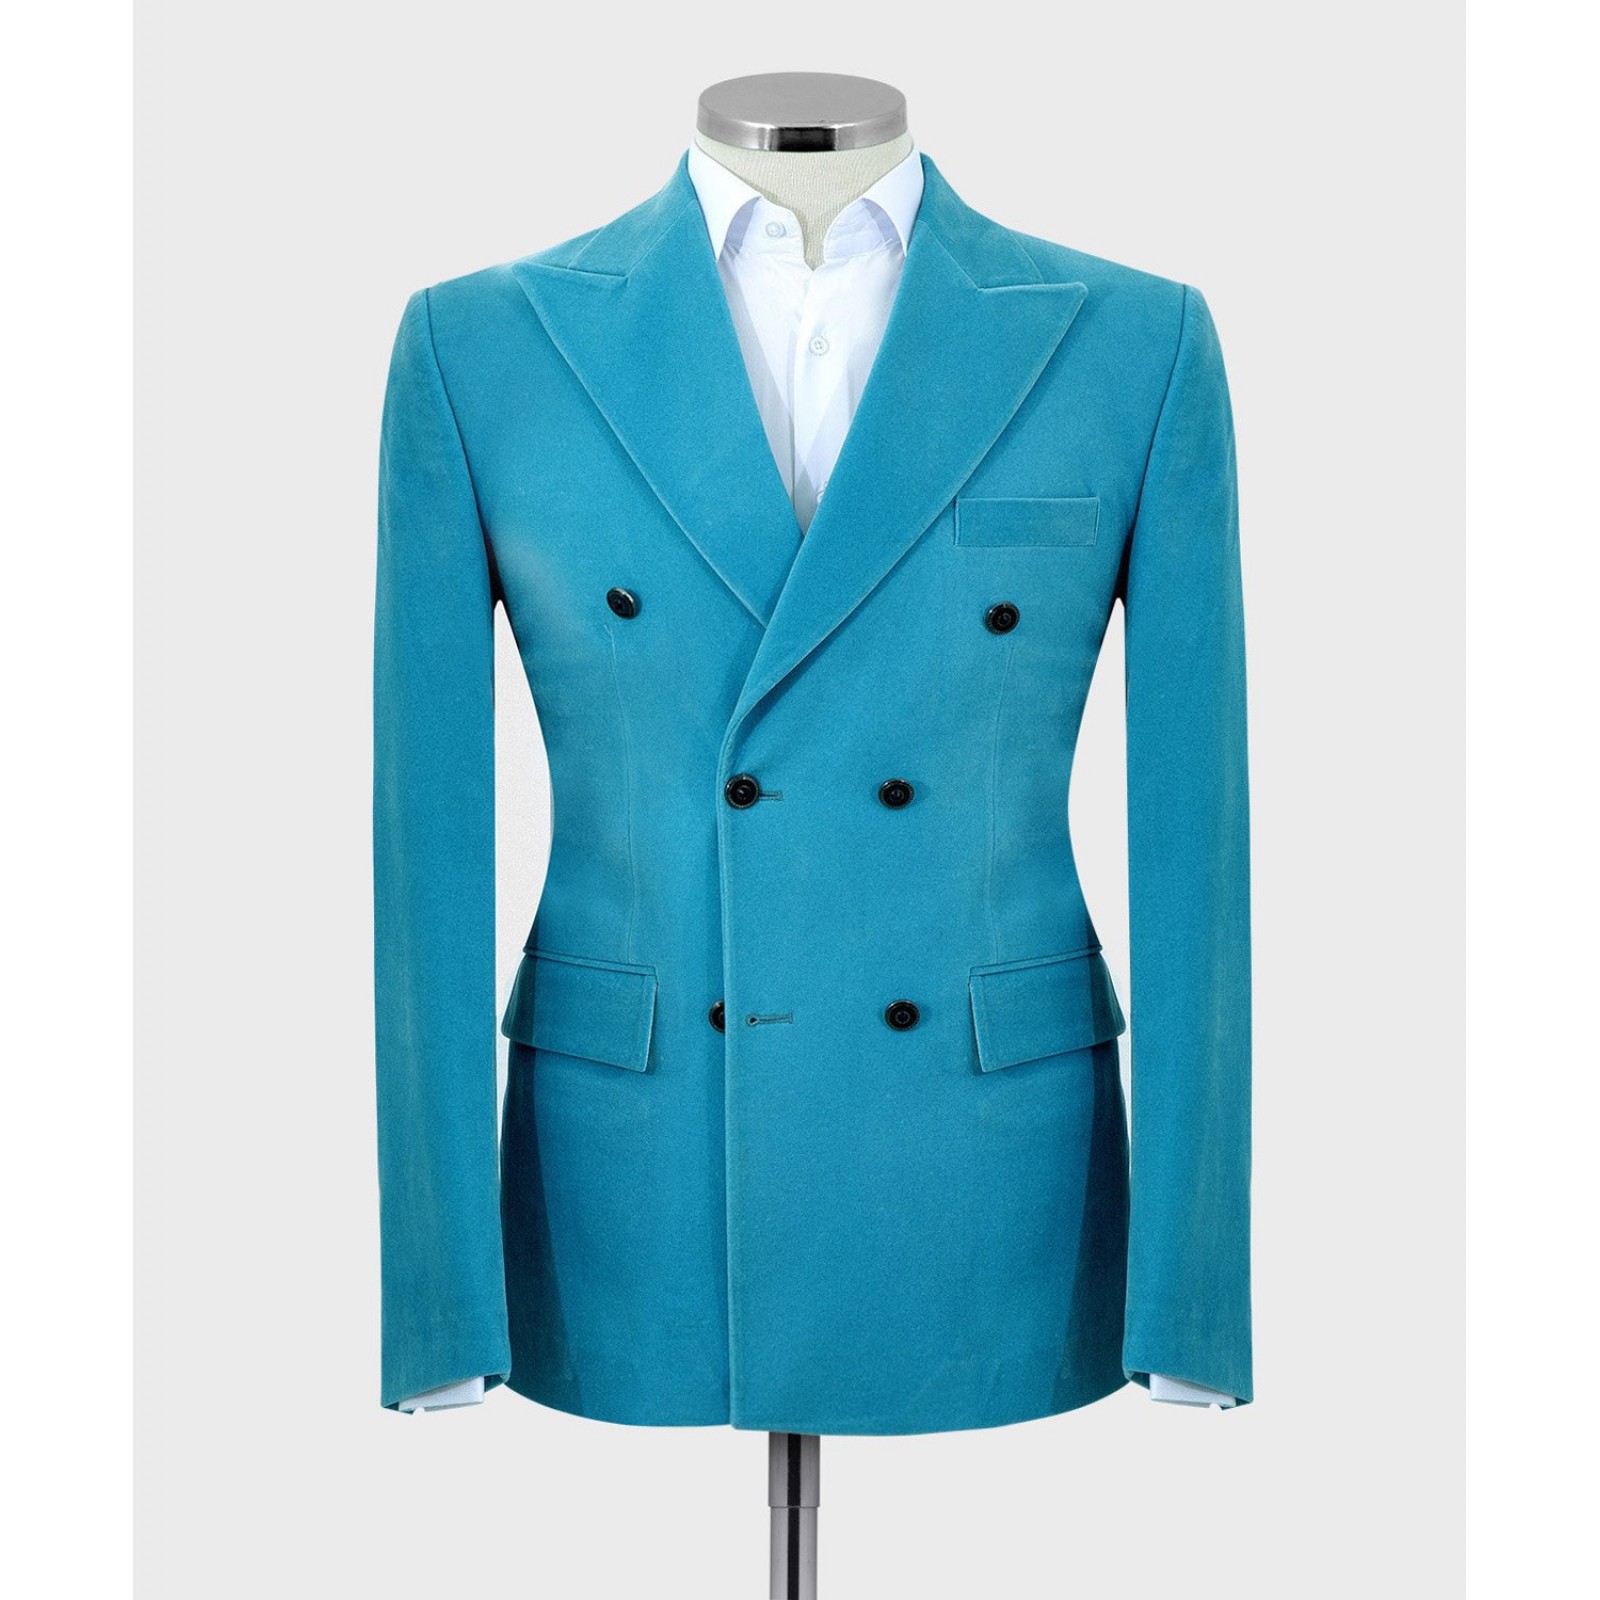 Turquoise Velvet Suit